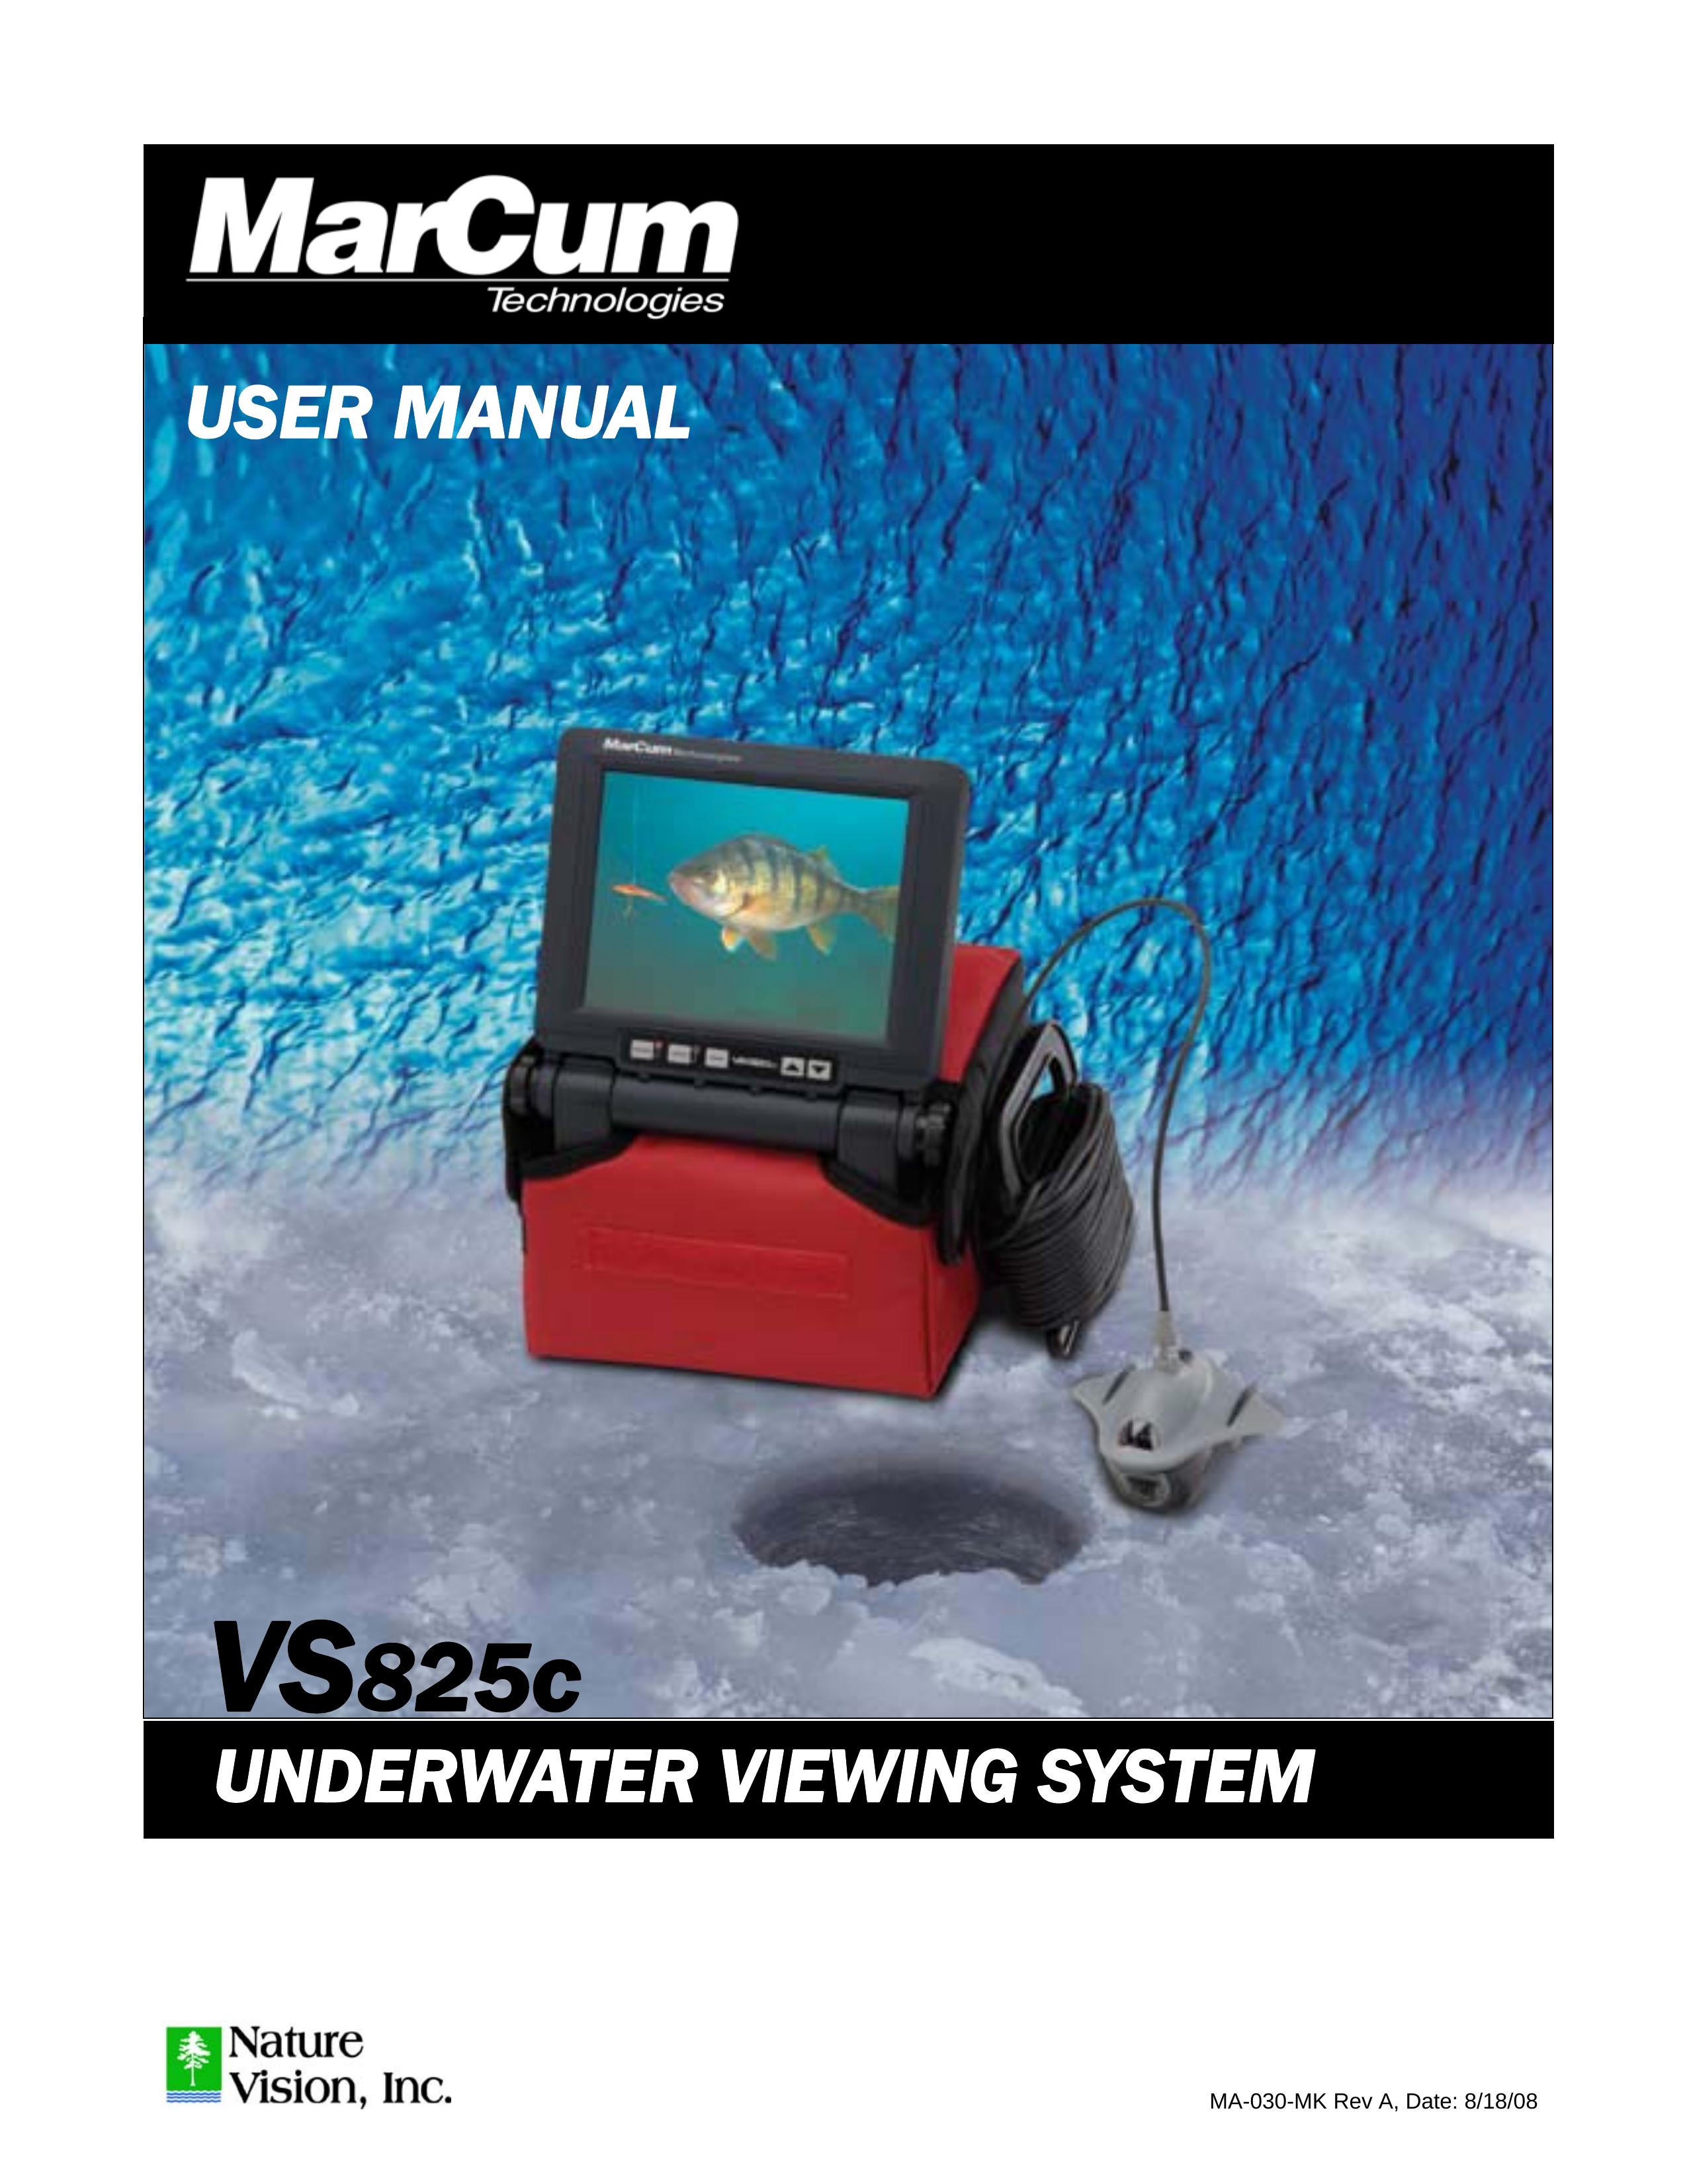 Marcum Technologies VS825 Digital Camera User Manual (Page 1)